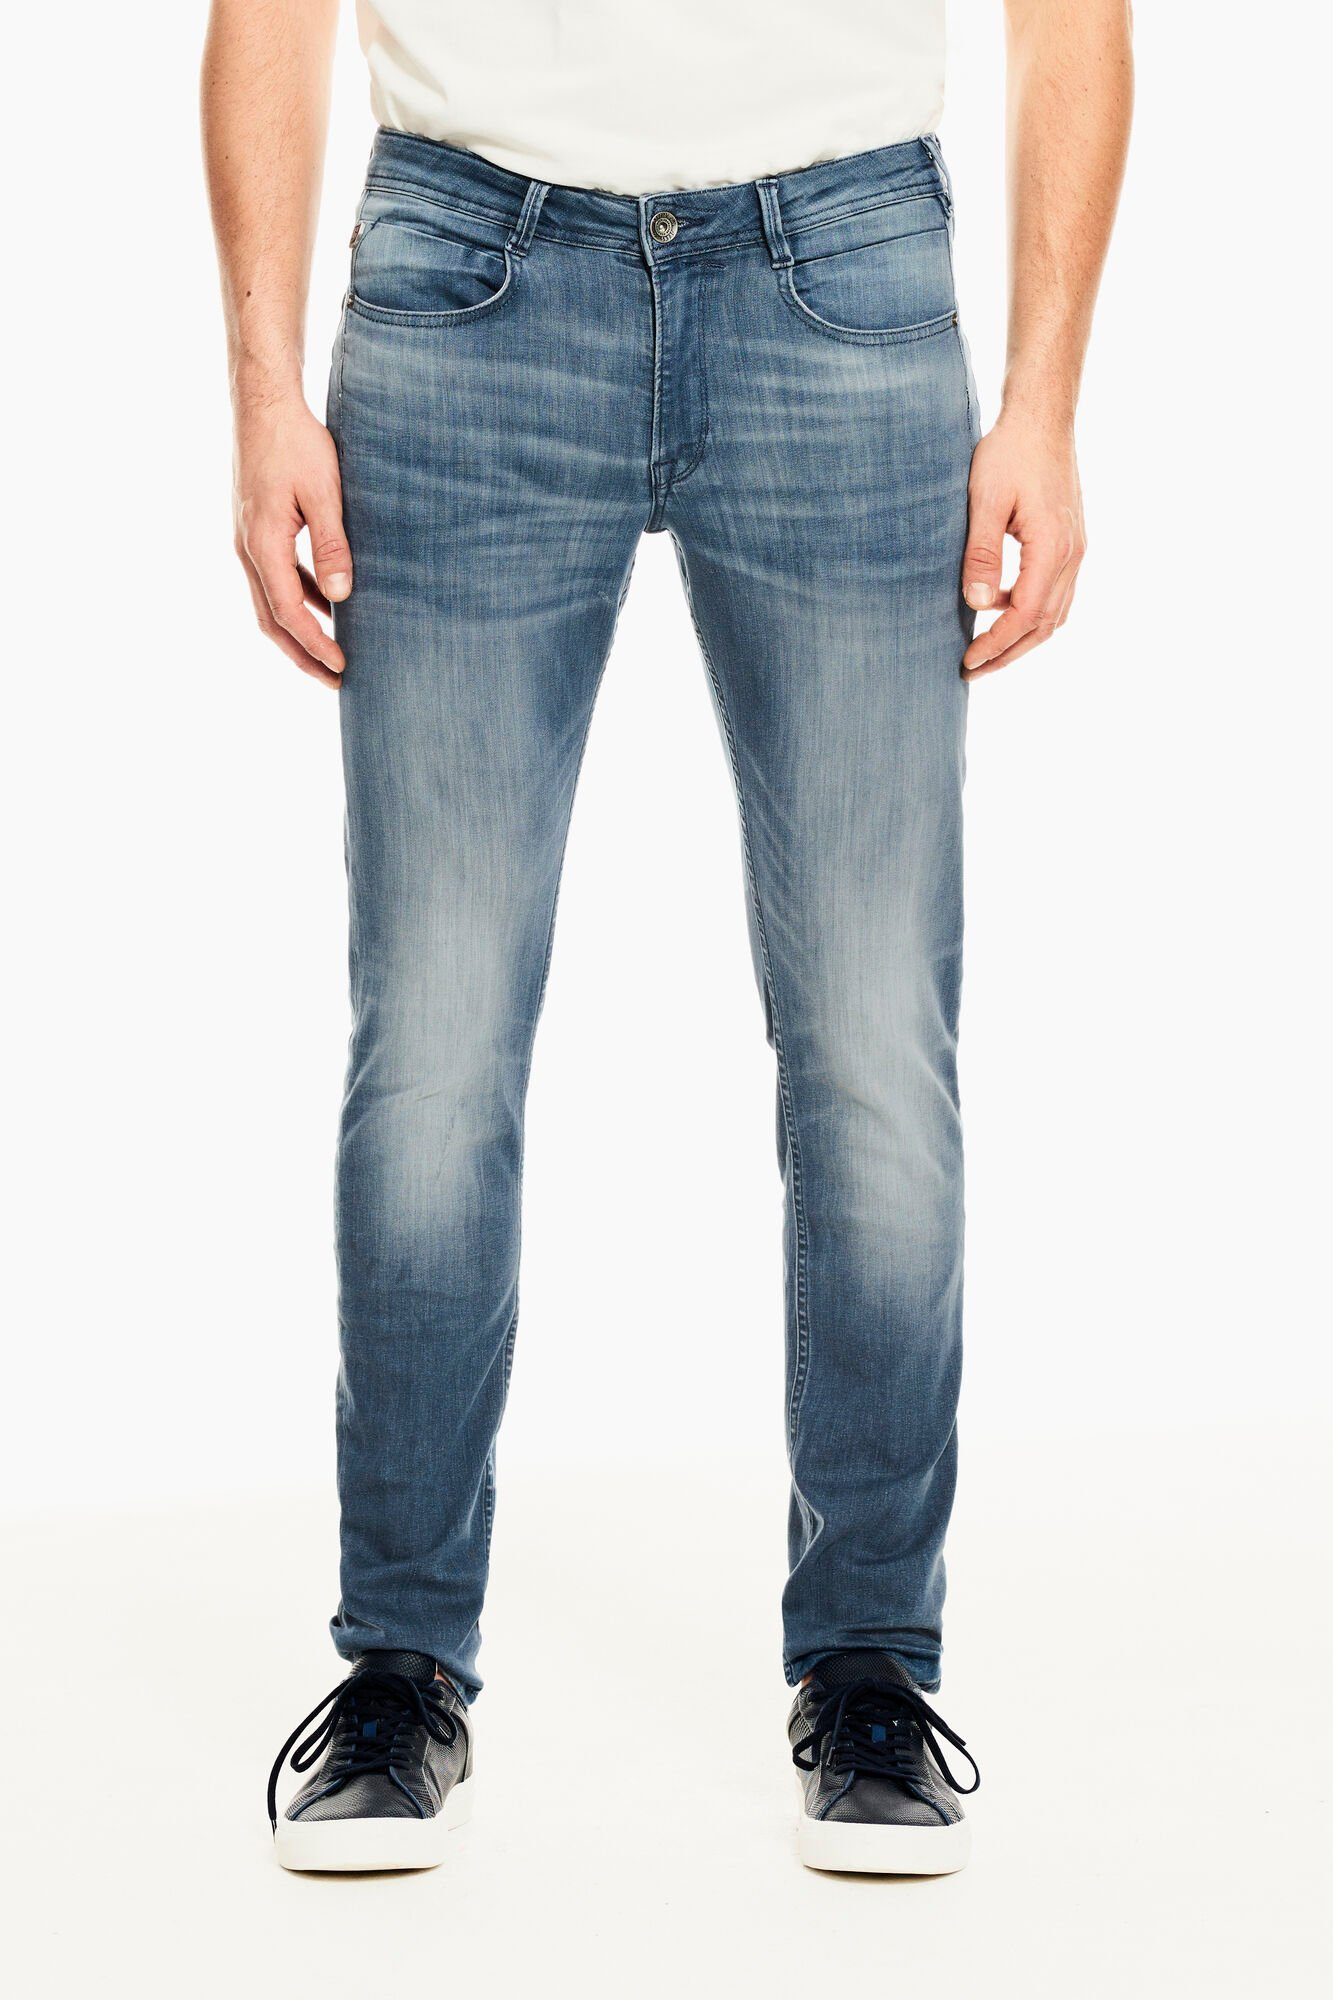 5-Pocket-Jeans ROCKO GARCIA GARCIA Denim - mid blue Ultra JEANS 690.3925 used medium